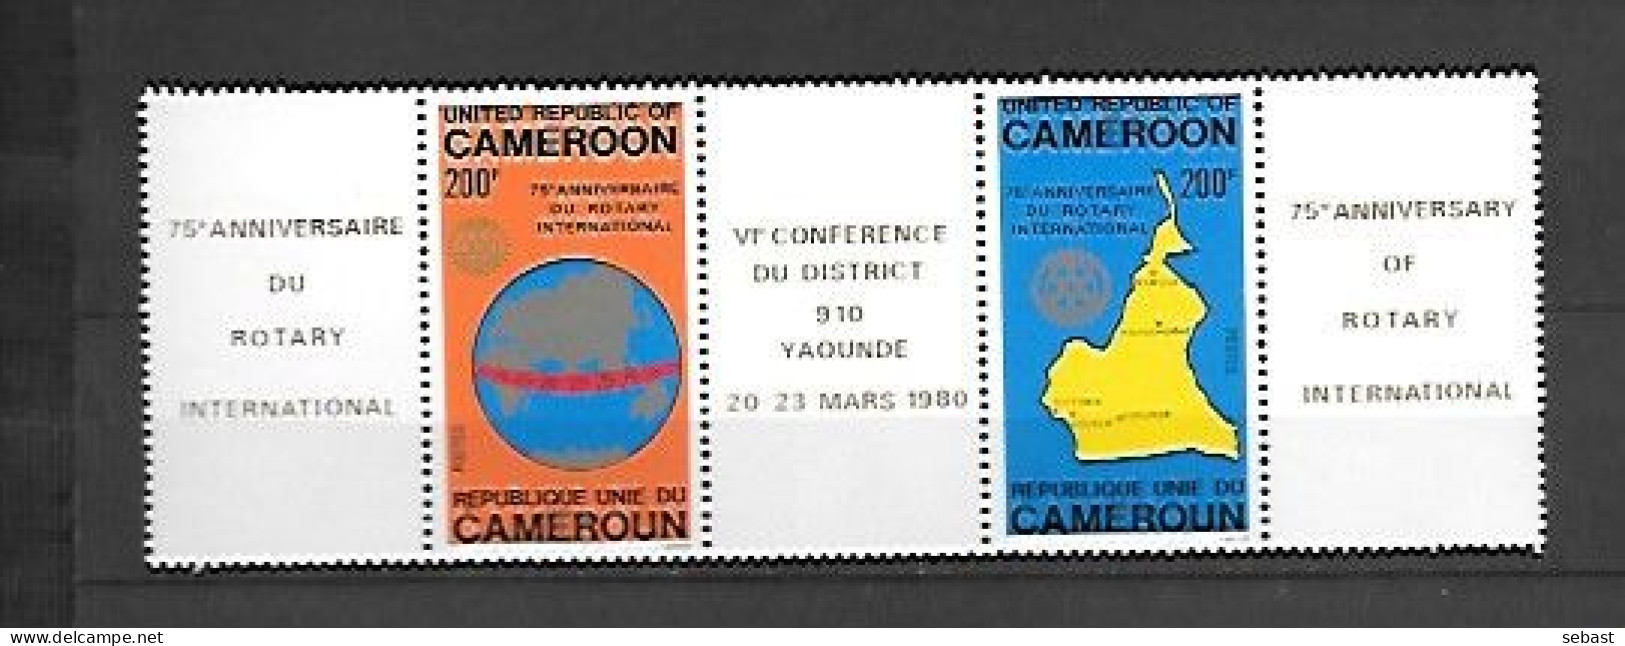 TIMBRE NEUF DU CAMEROUN DE 1980 N° MICHEL 925/26 - Kamerun (1960-...)